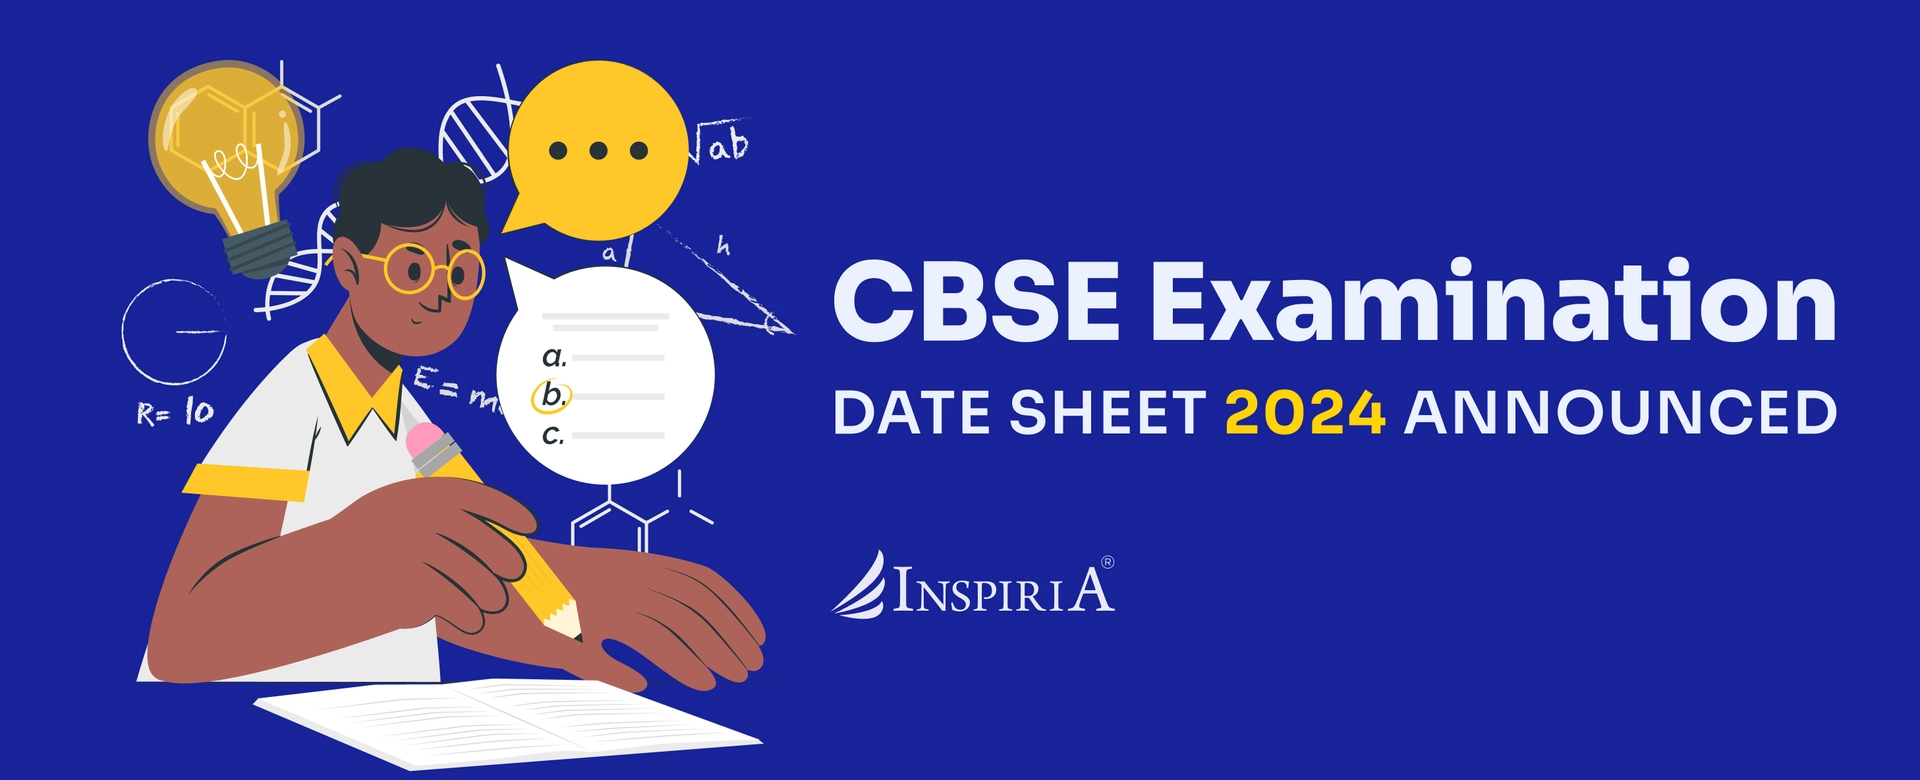 CBSE 2024 Examination Date Sheet Announced